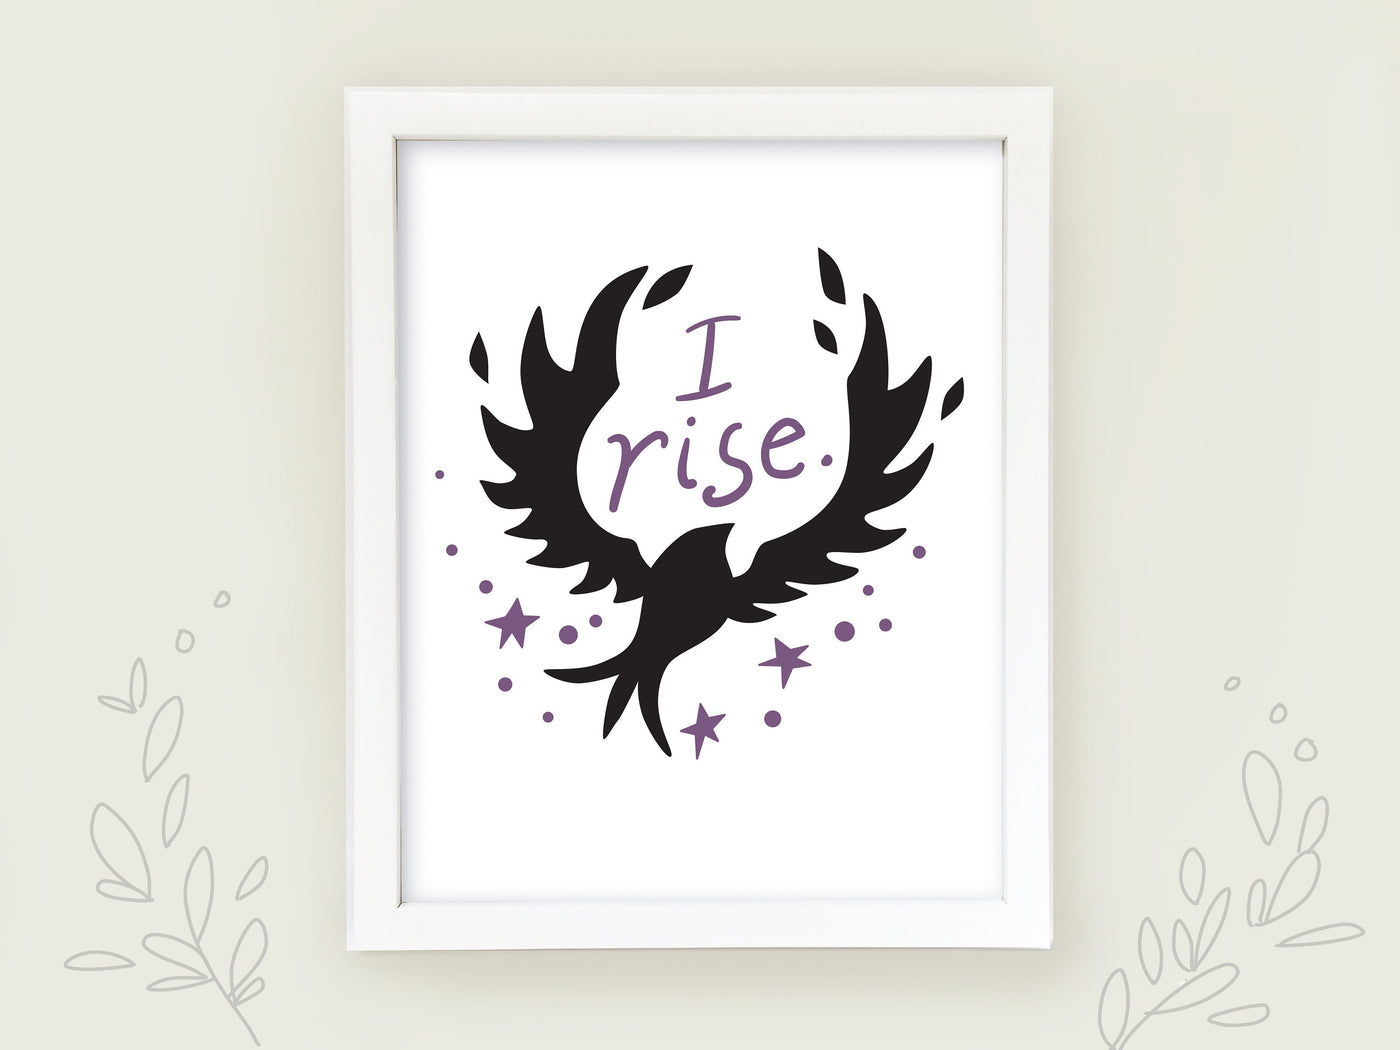 Donation "I rise" Black Lives printable wall art, SVG